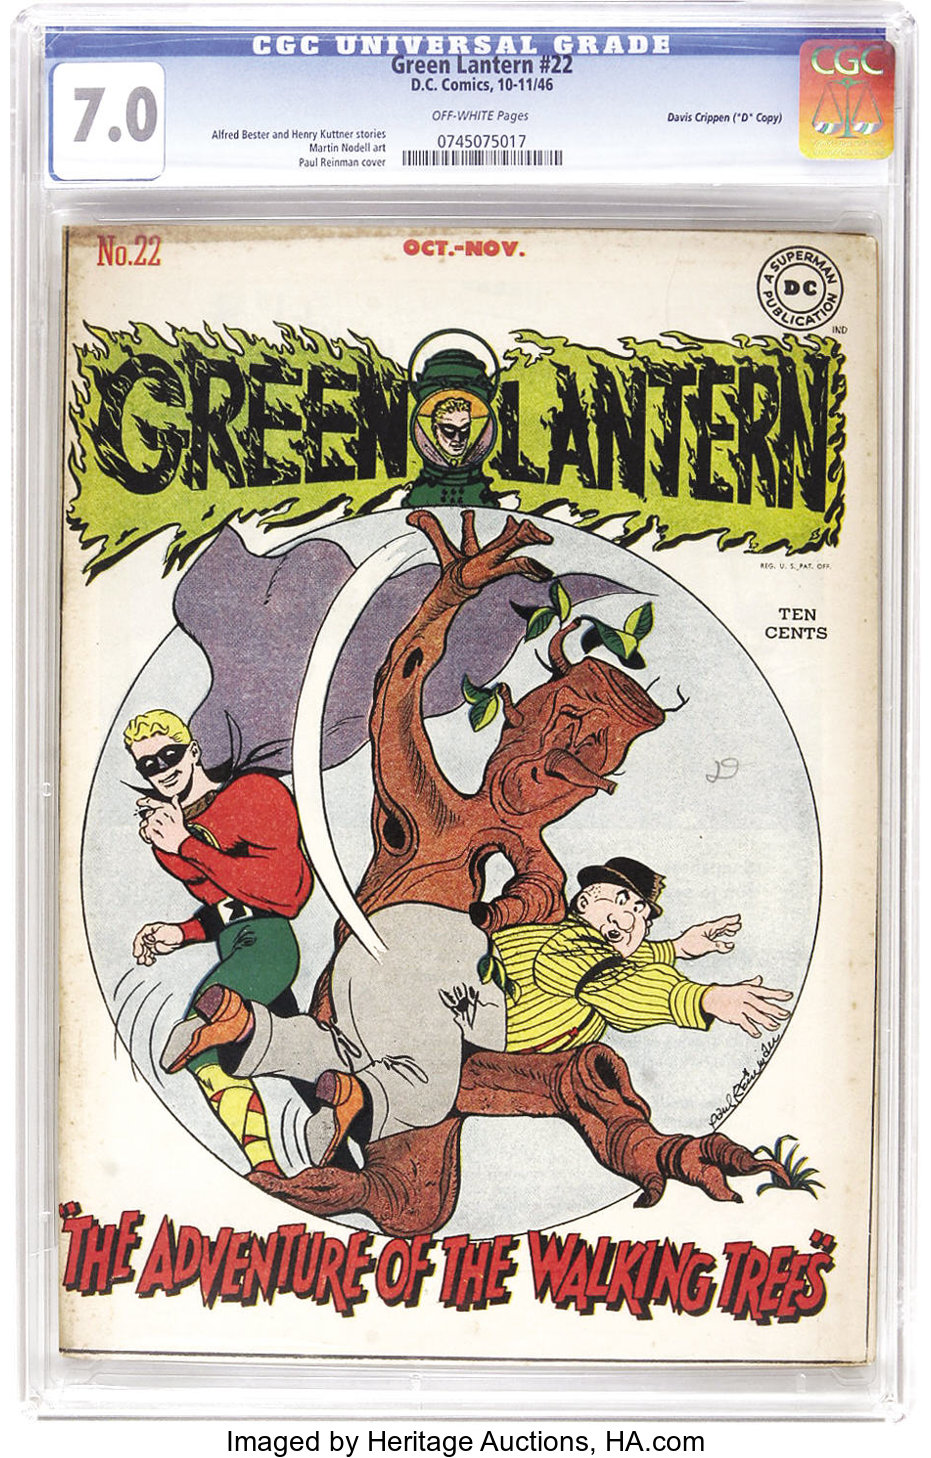 Not Safe For Work Comic Green-Lantern-22.jpeg